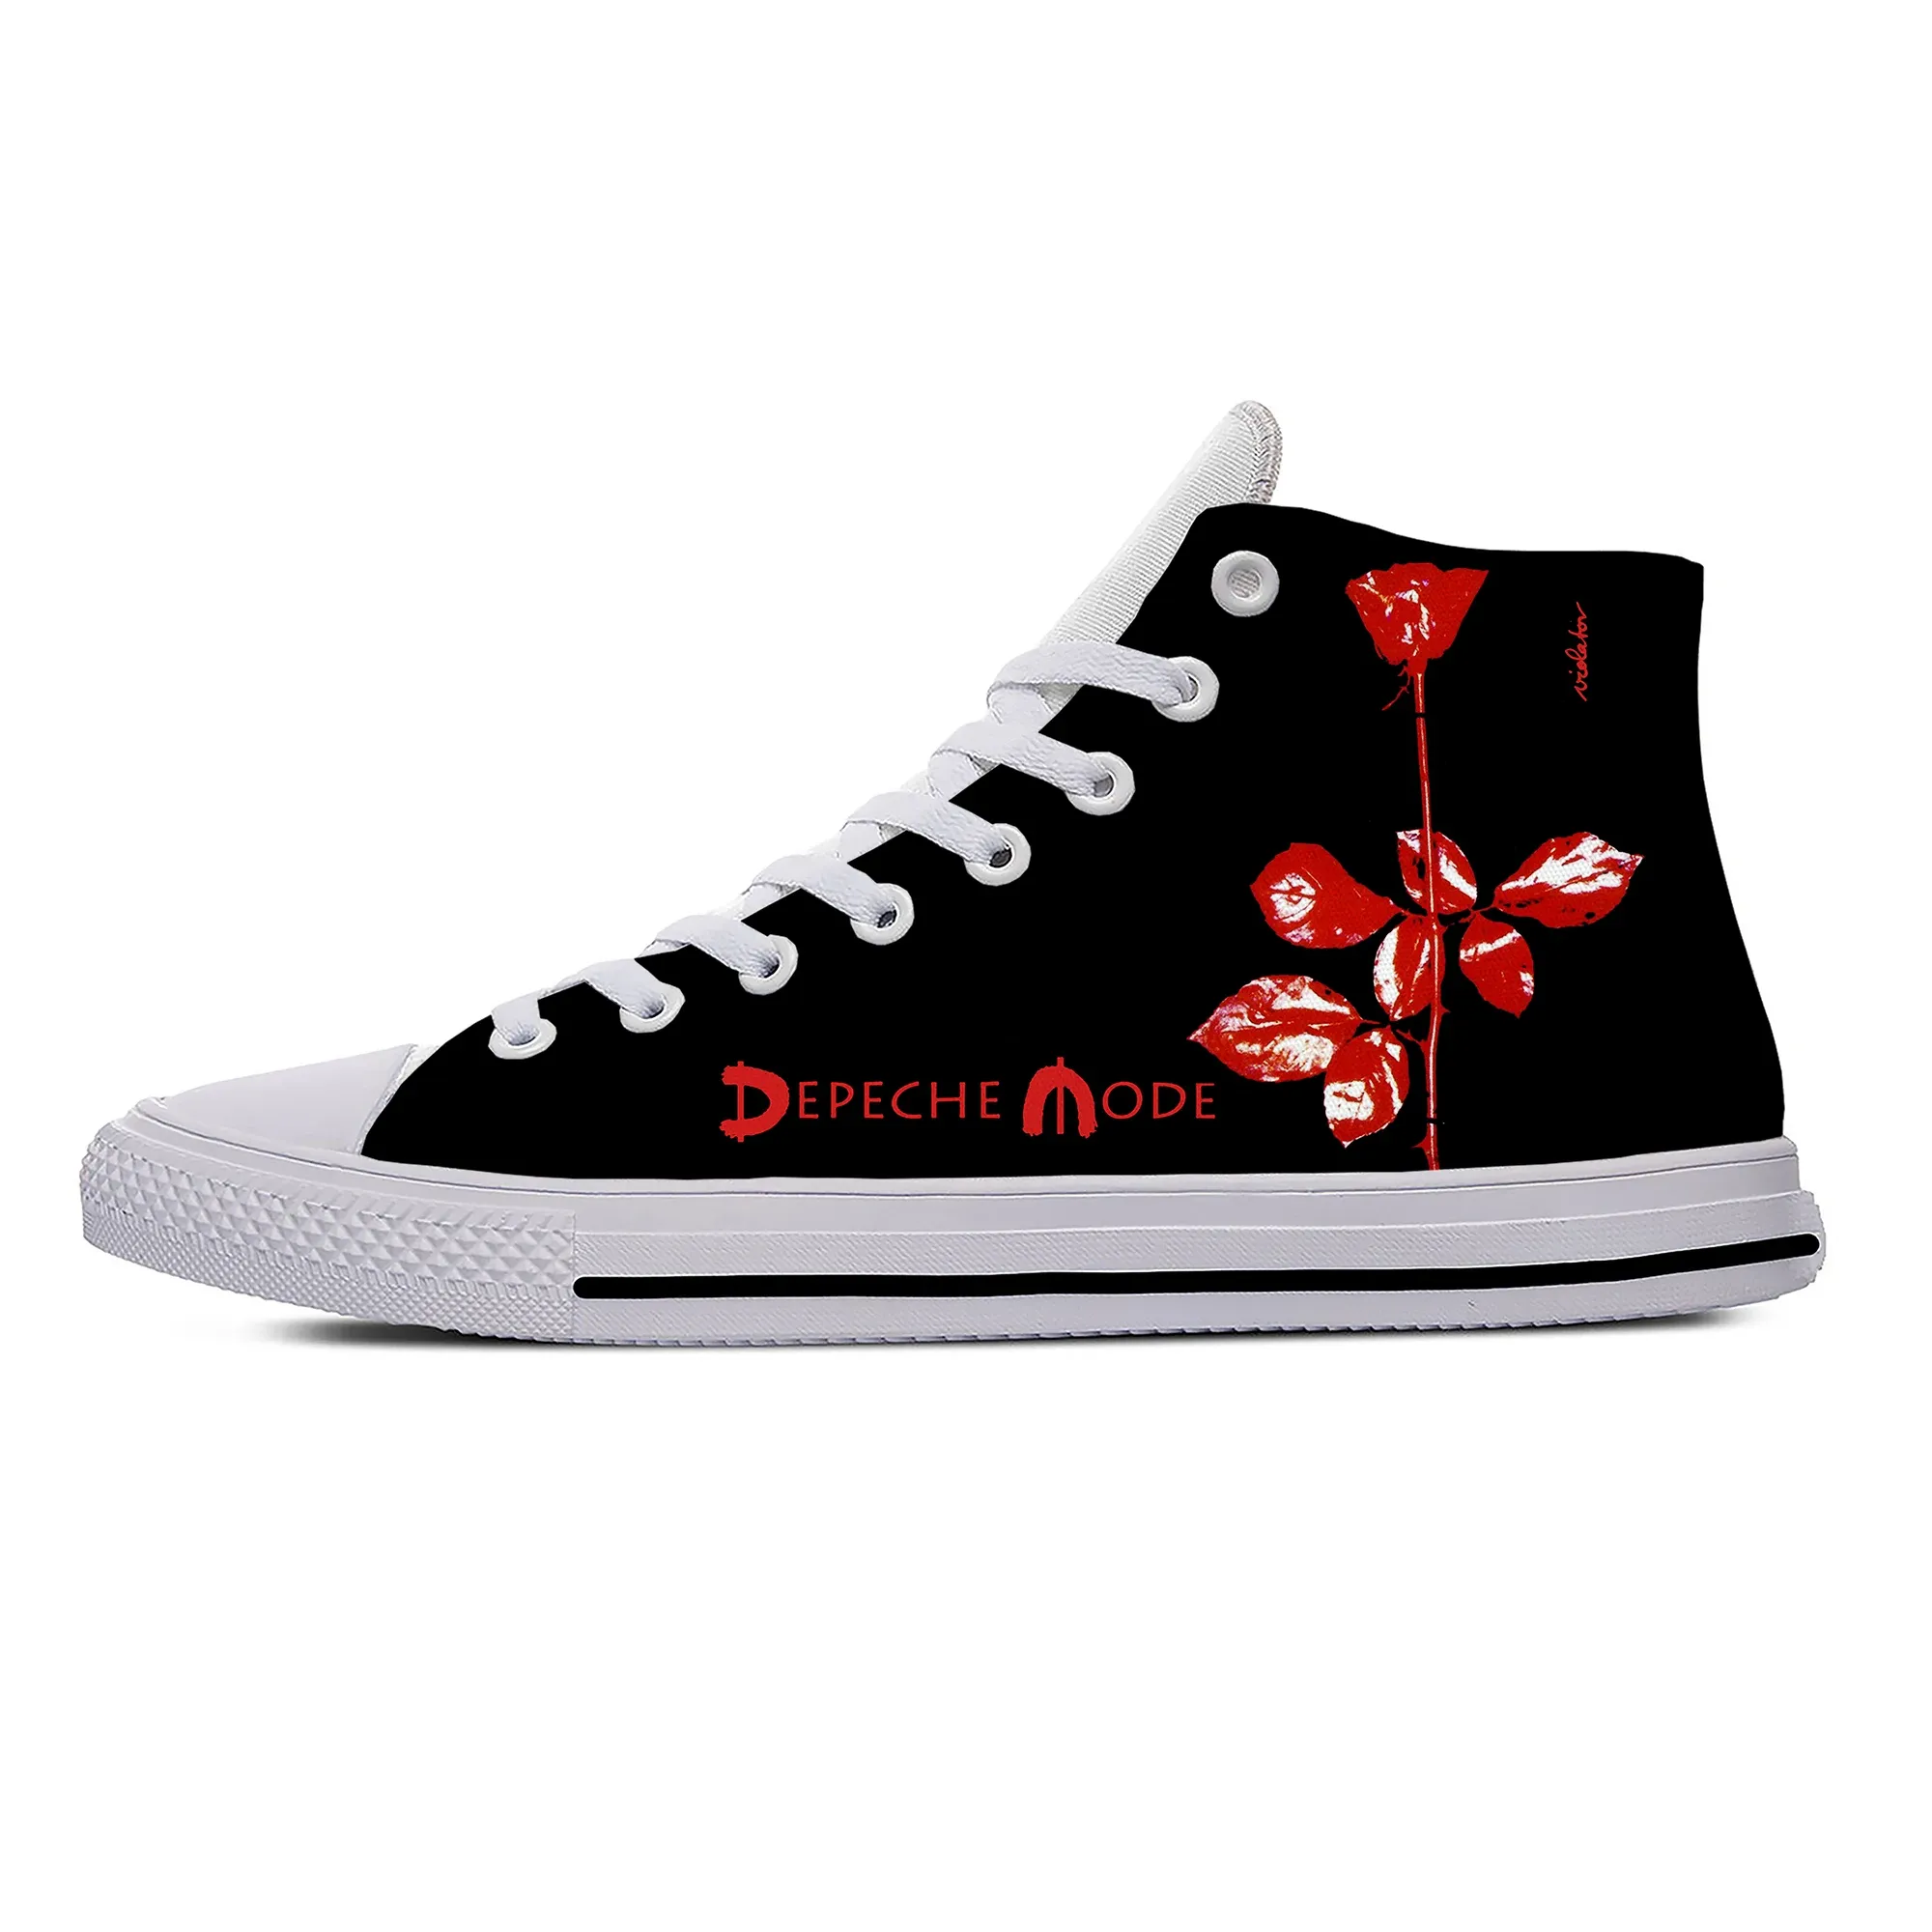 Schoenen Depeche Band High Top Sneakers Mode Mens Dames Tiener Casual schoenen DM Canvas Running Shoes 3D Gedrukte lichtgewicht schoen